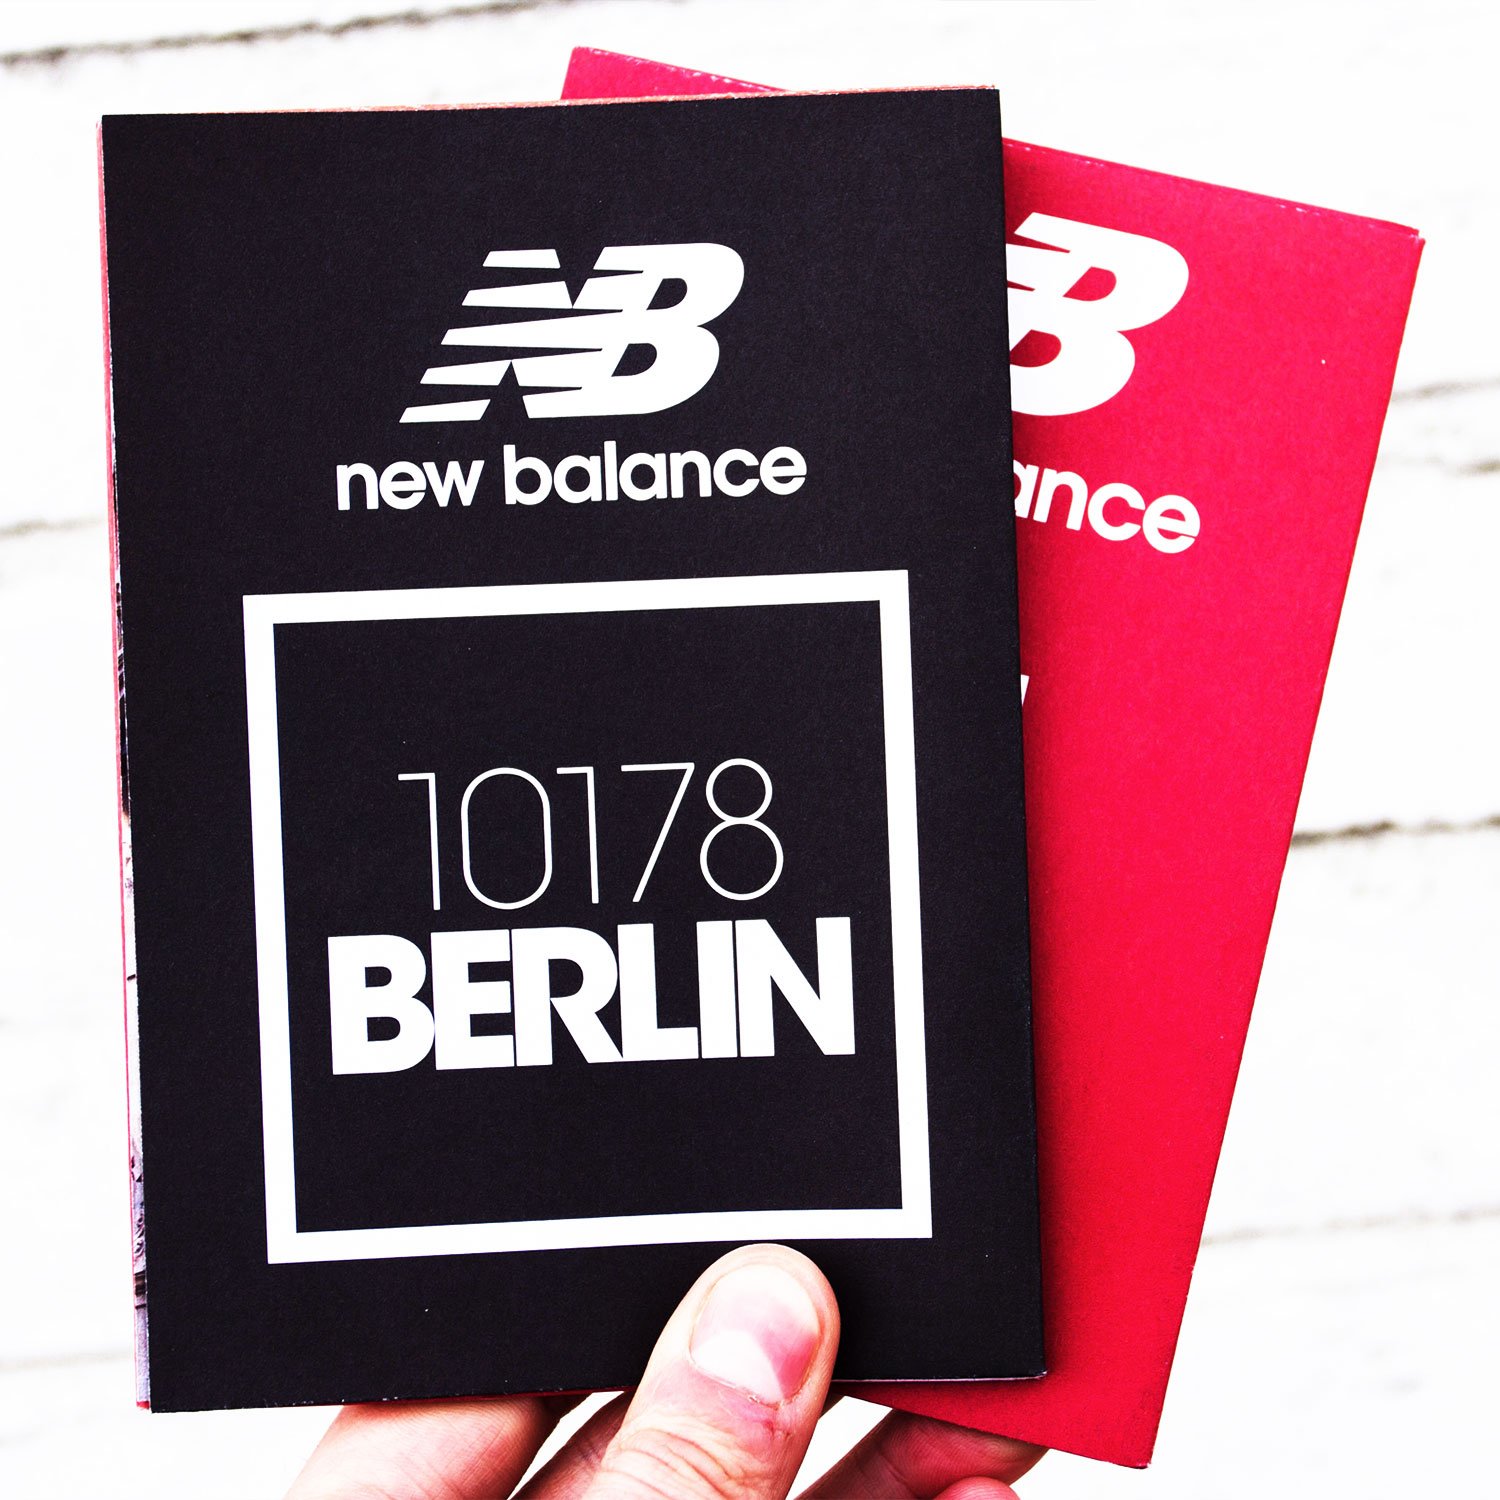 New-Balance-Berlin-booklet.jpg